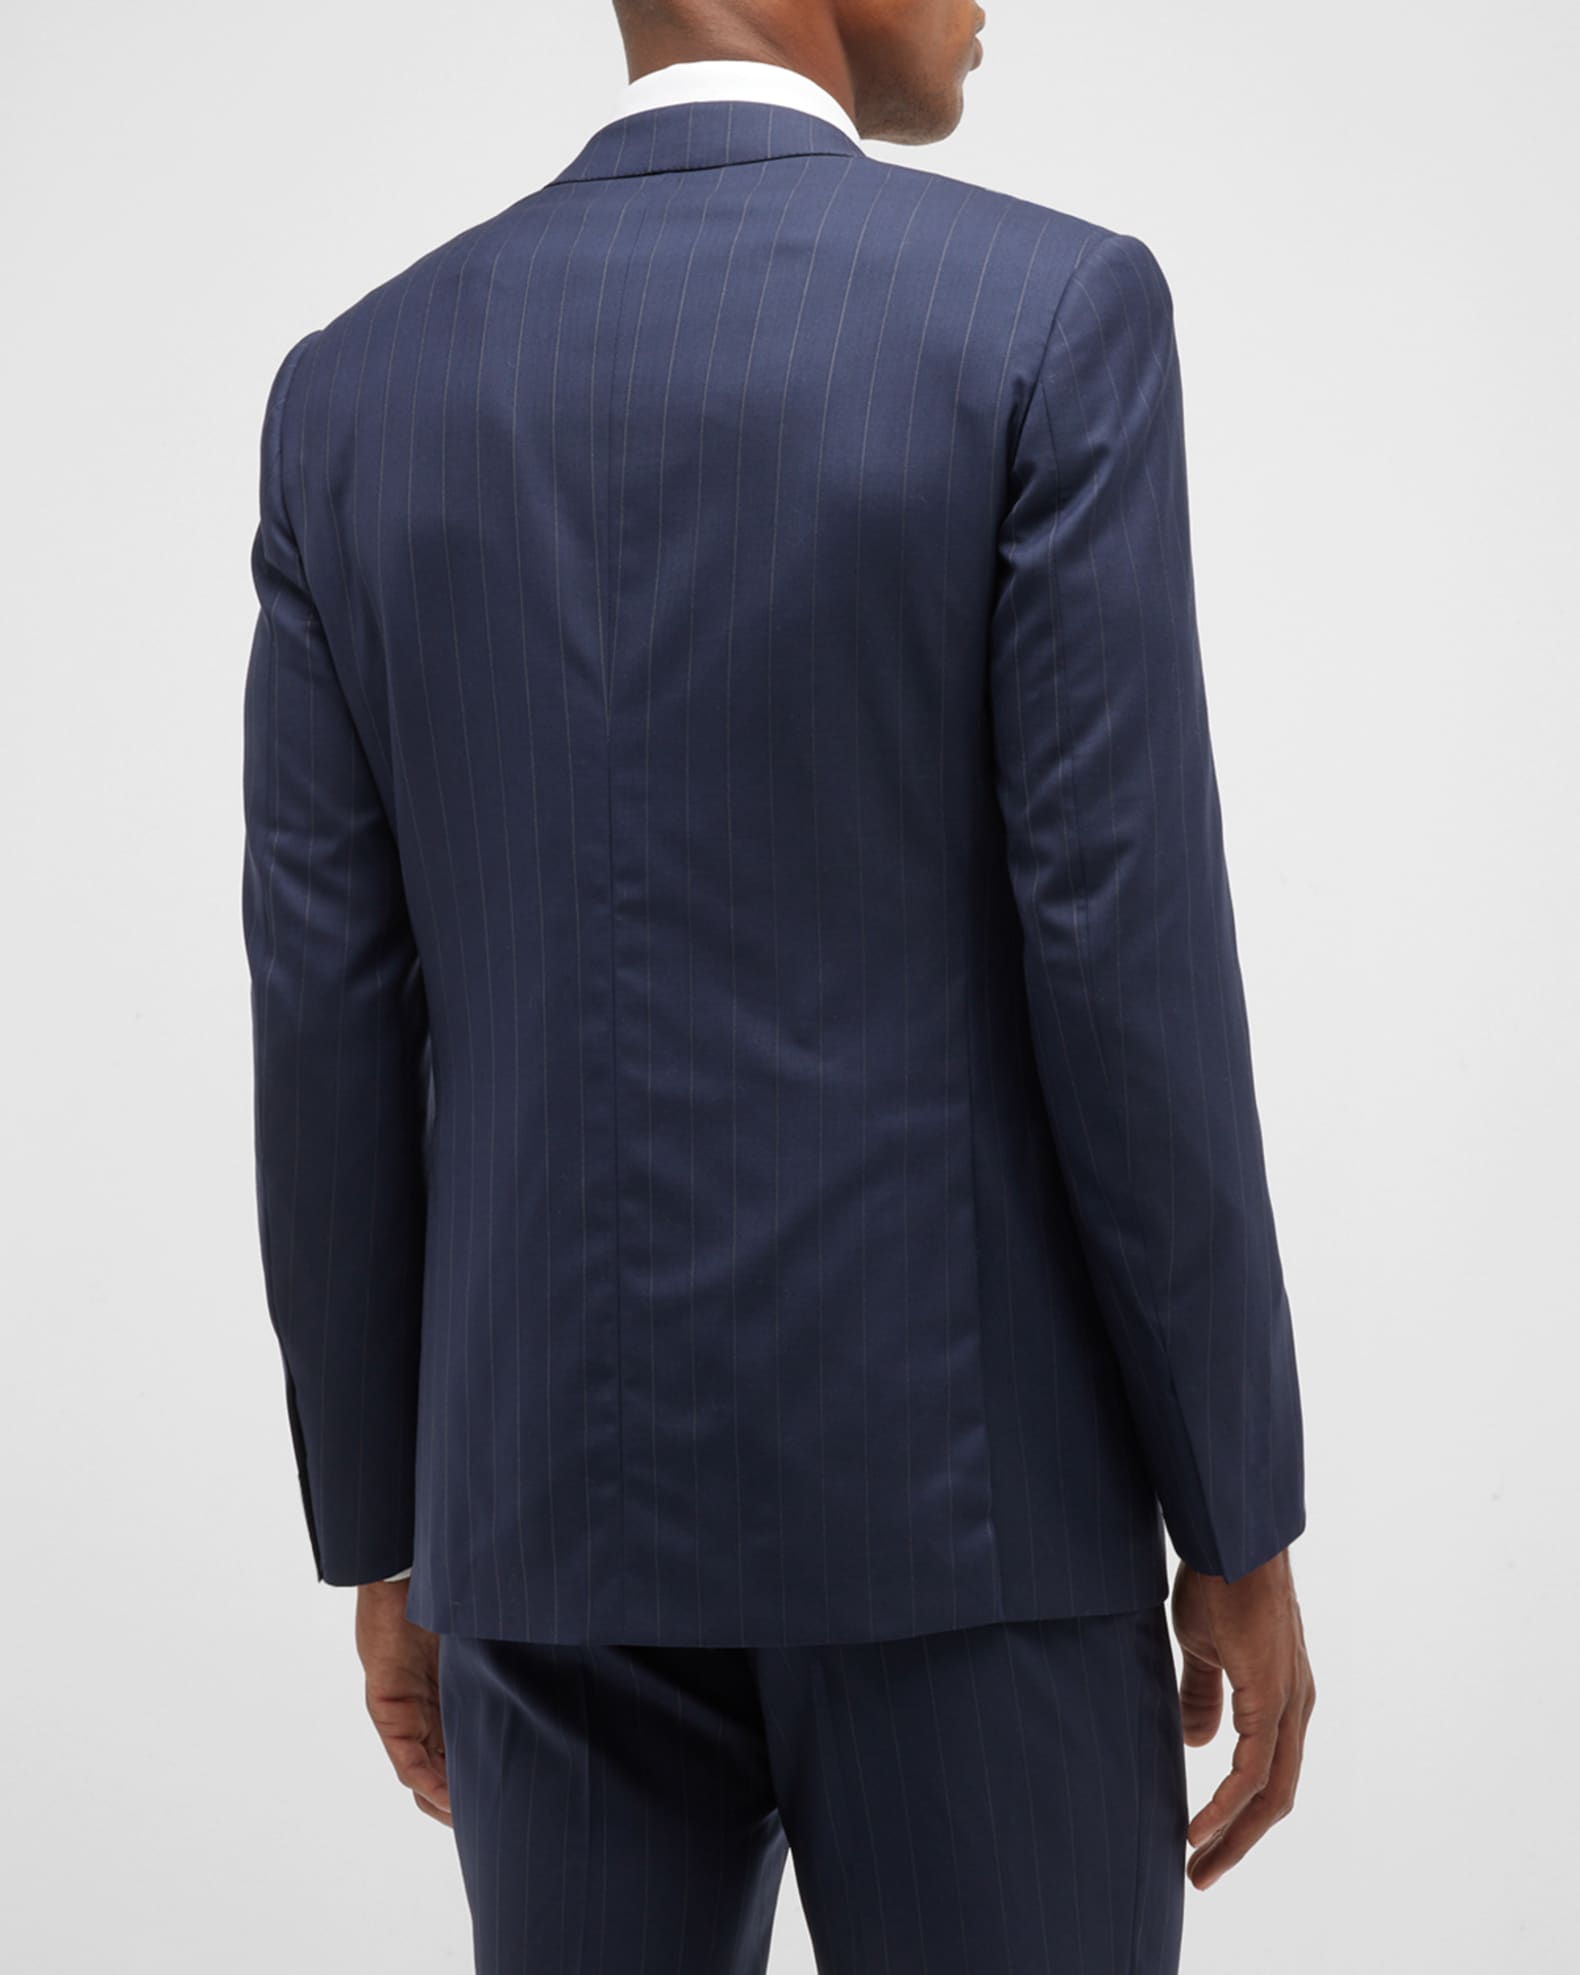 Brioni Men's Pinstripe Wool Suit | Neiman Marcus